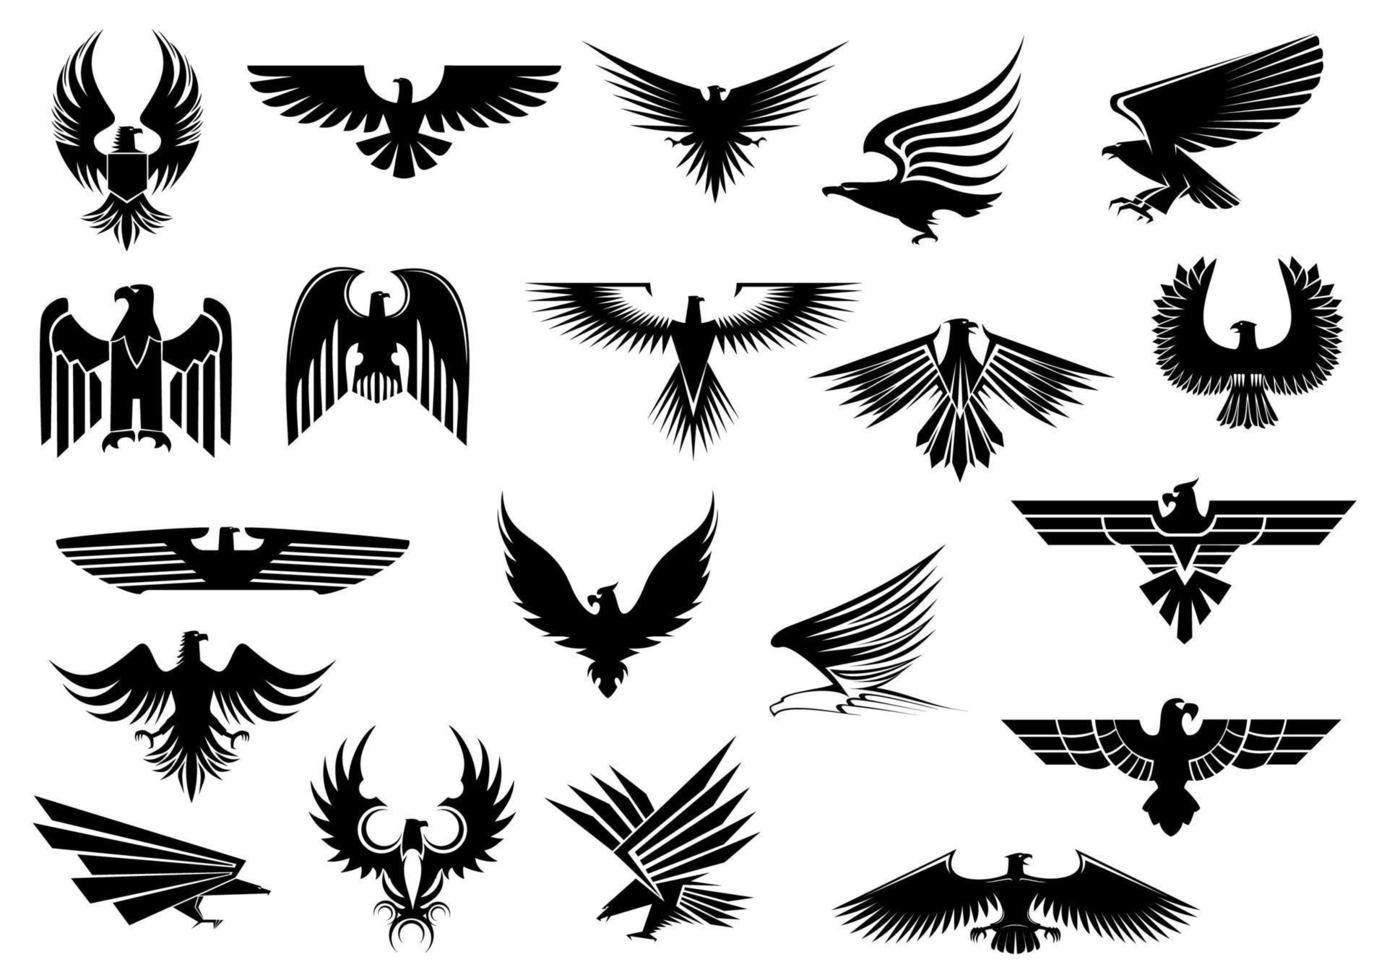 Heraldic eagles, falcons and hawks set vector